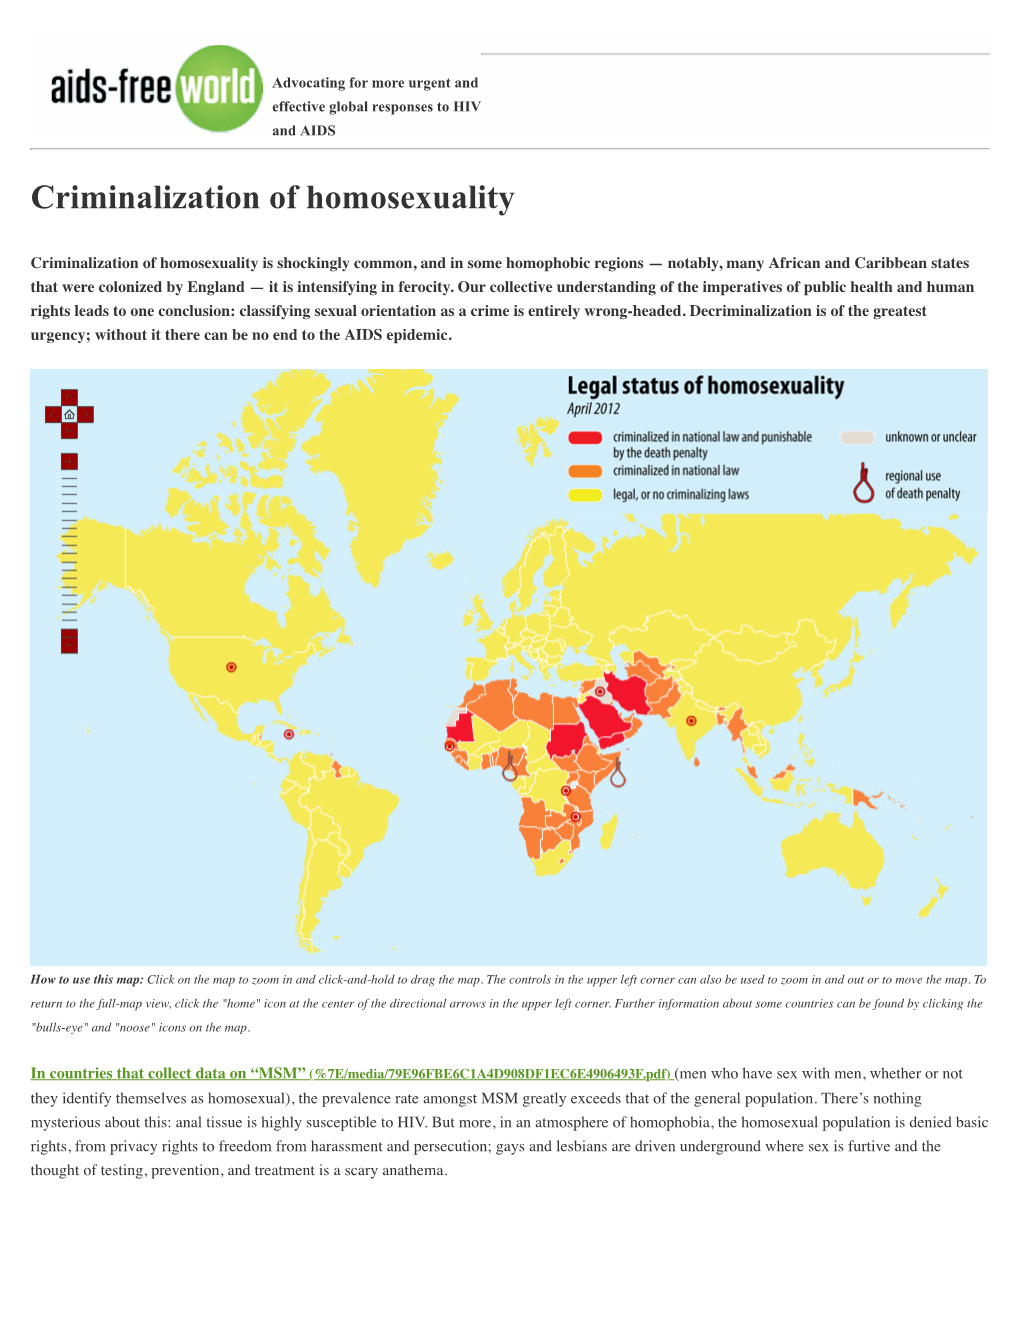 Criminalization of Homosexuality